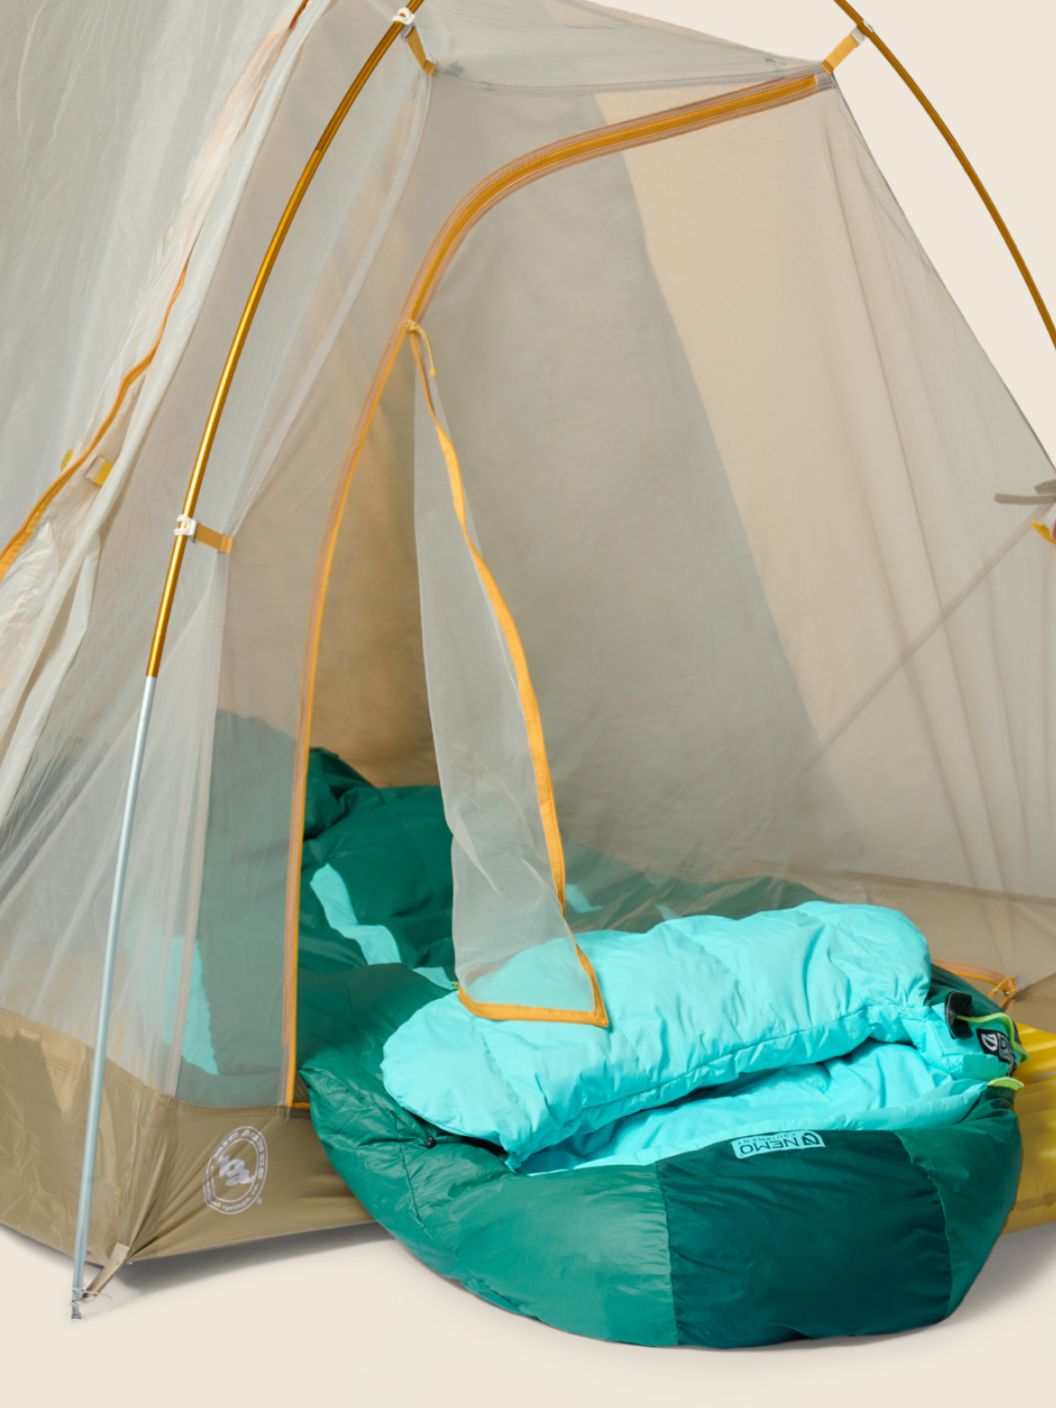 A sleeping bag inside of a tent.